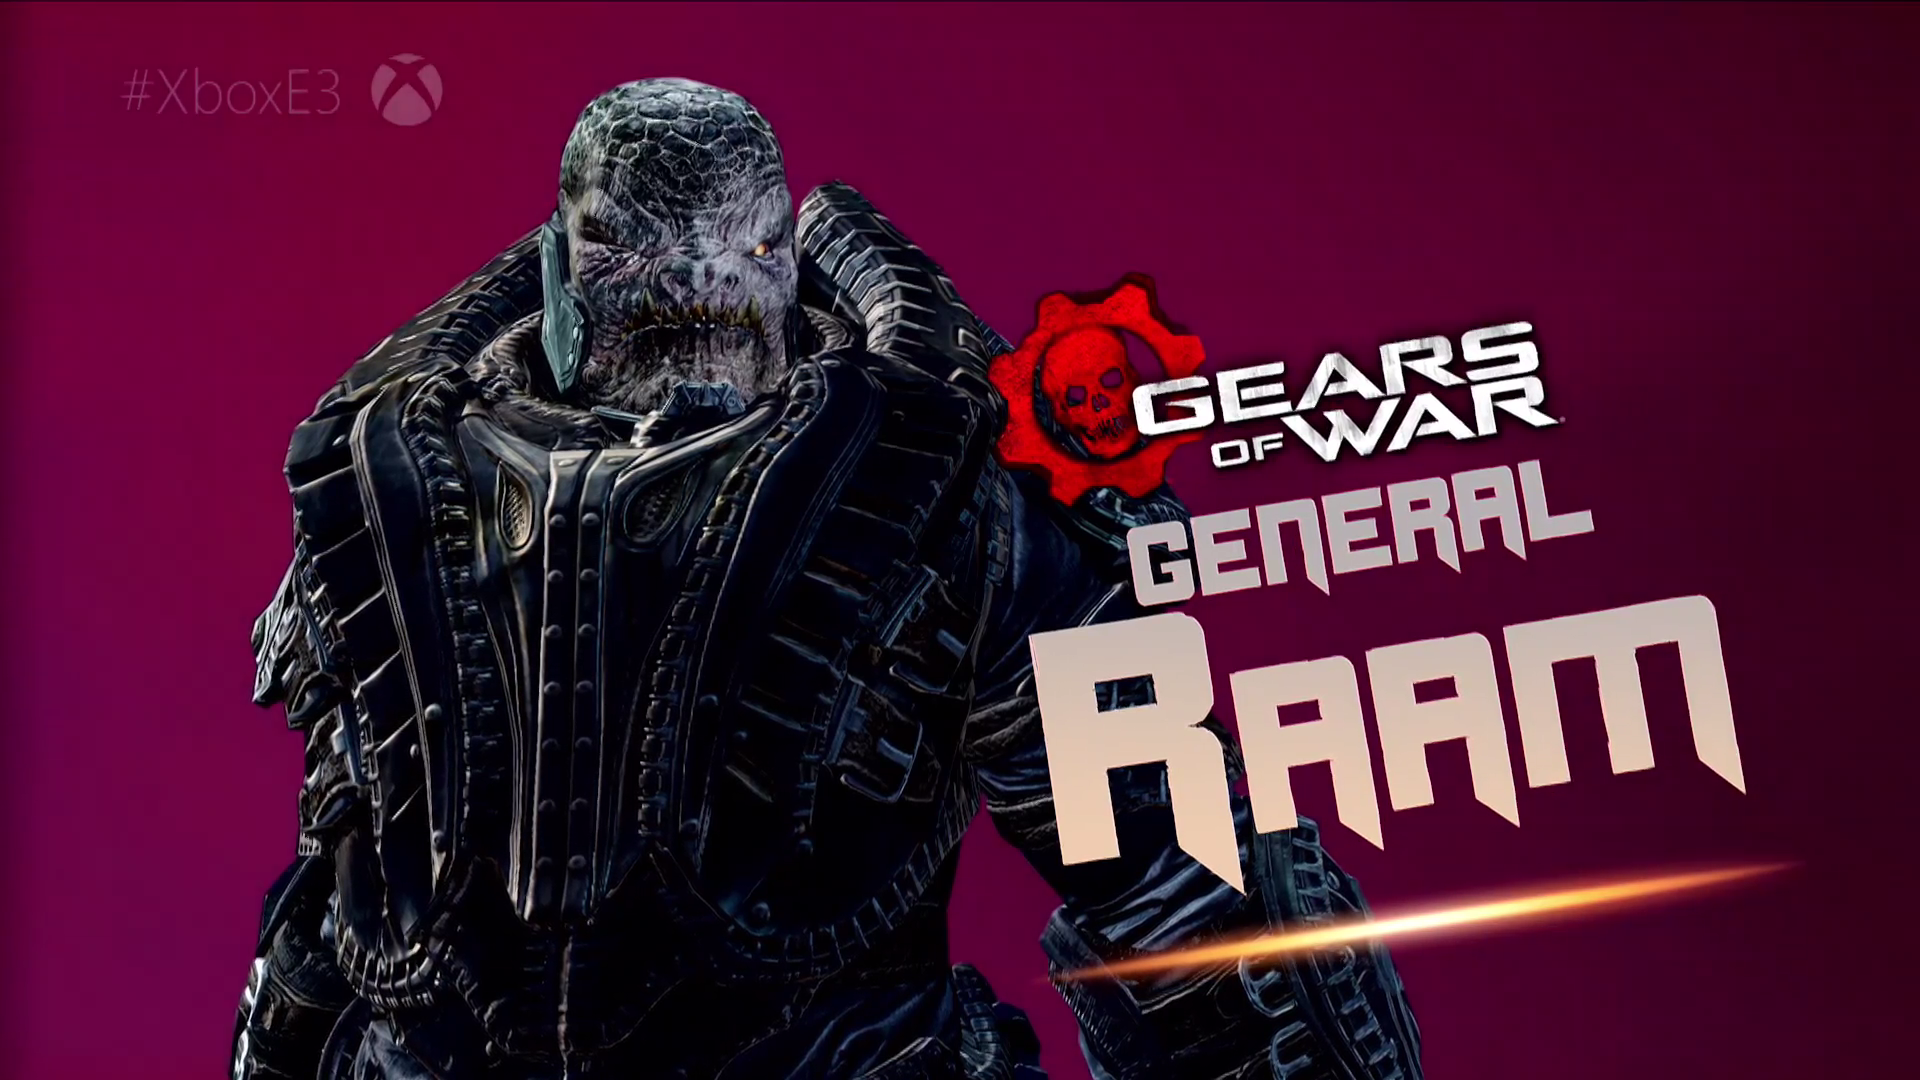 Image for Gears of War's General Raam will appear in Killer Instinct